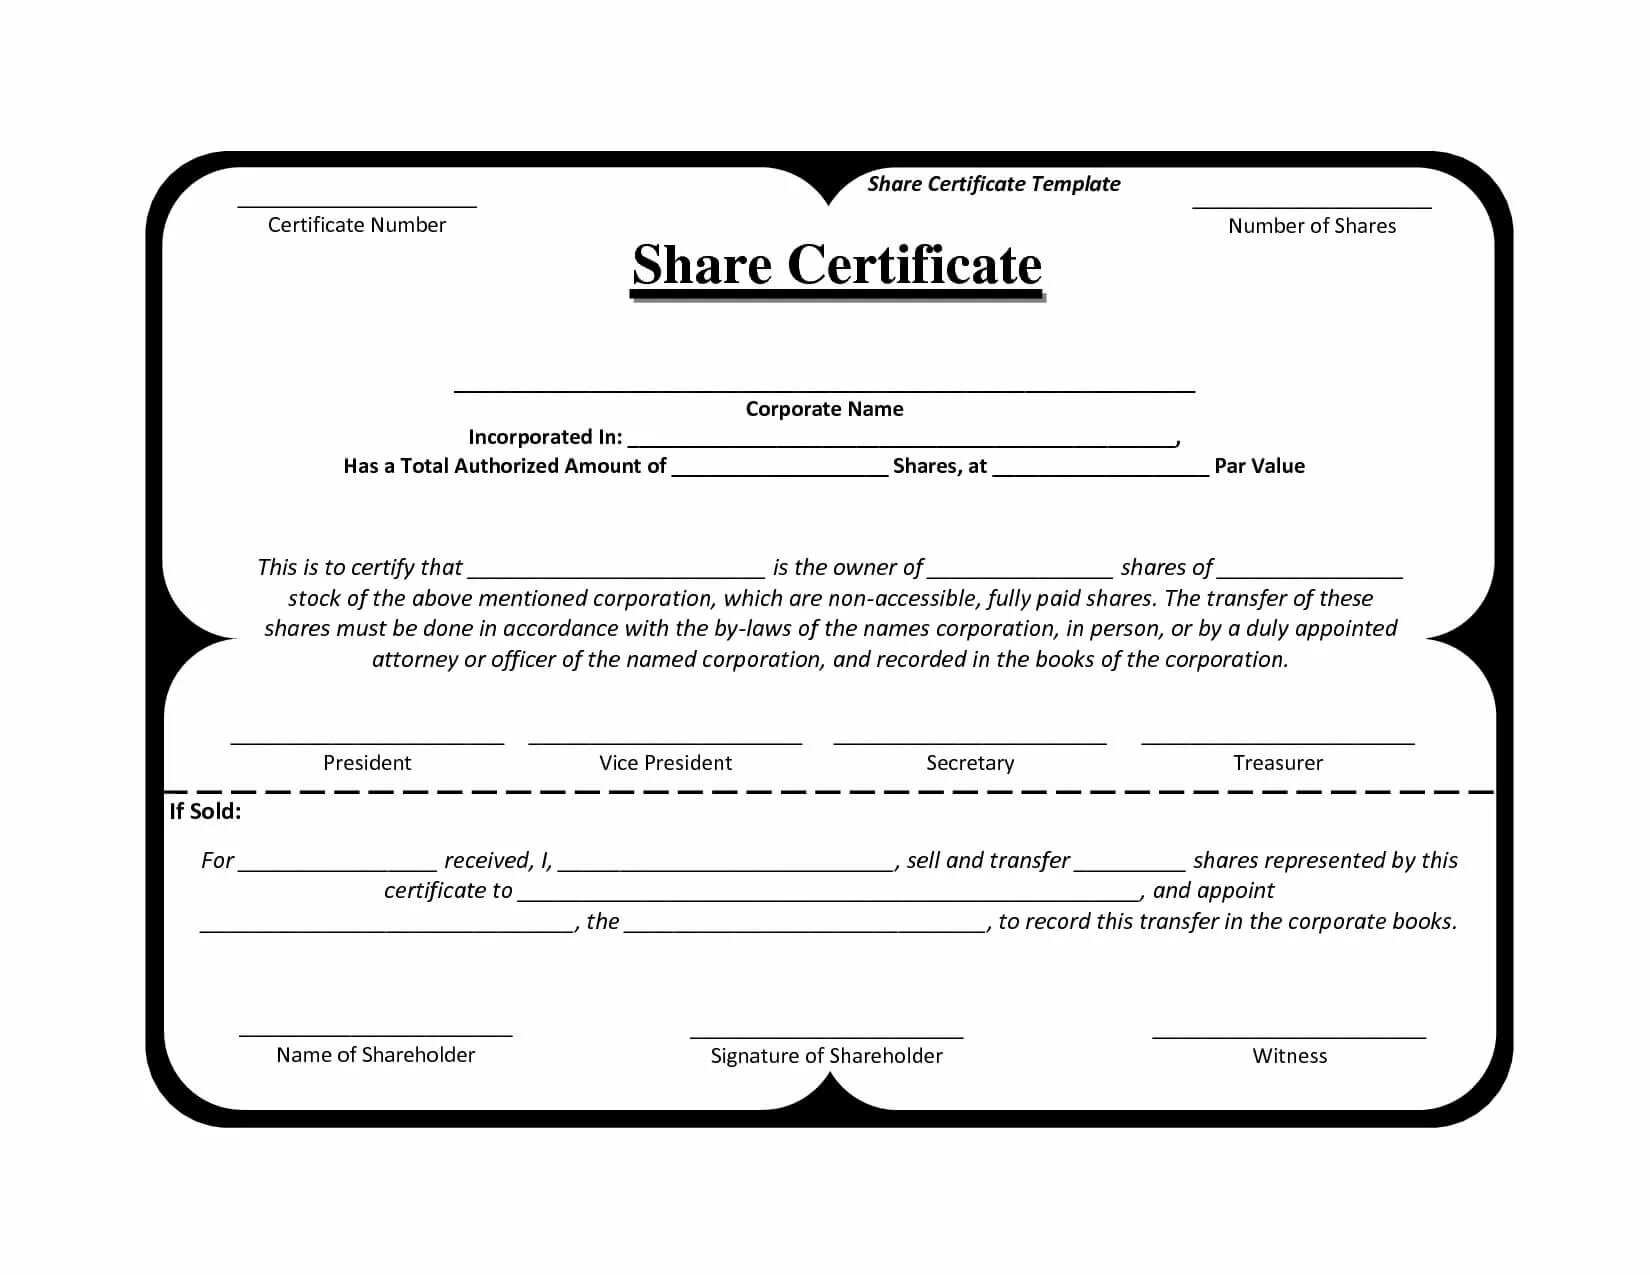 Certificate шаблон. Share Certificate Template. Certificate of shareholders. Certificate of shareholder образец.